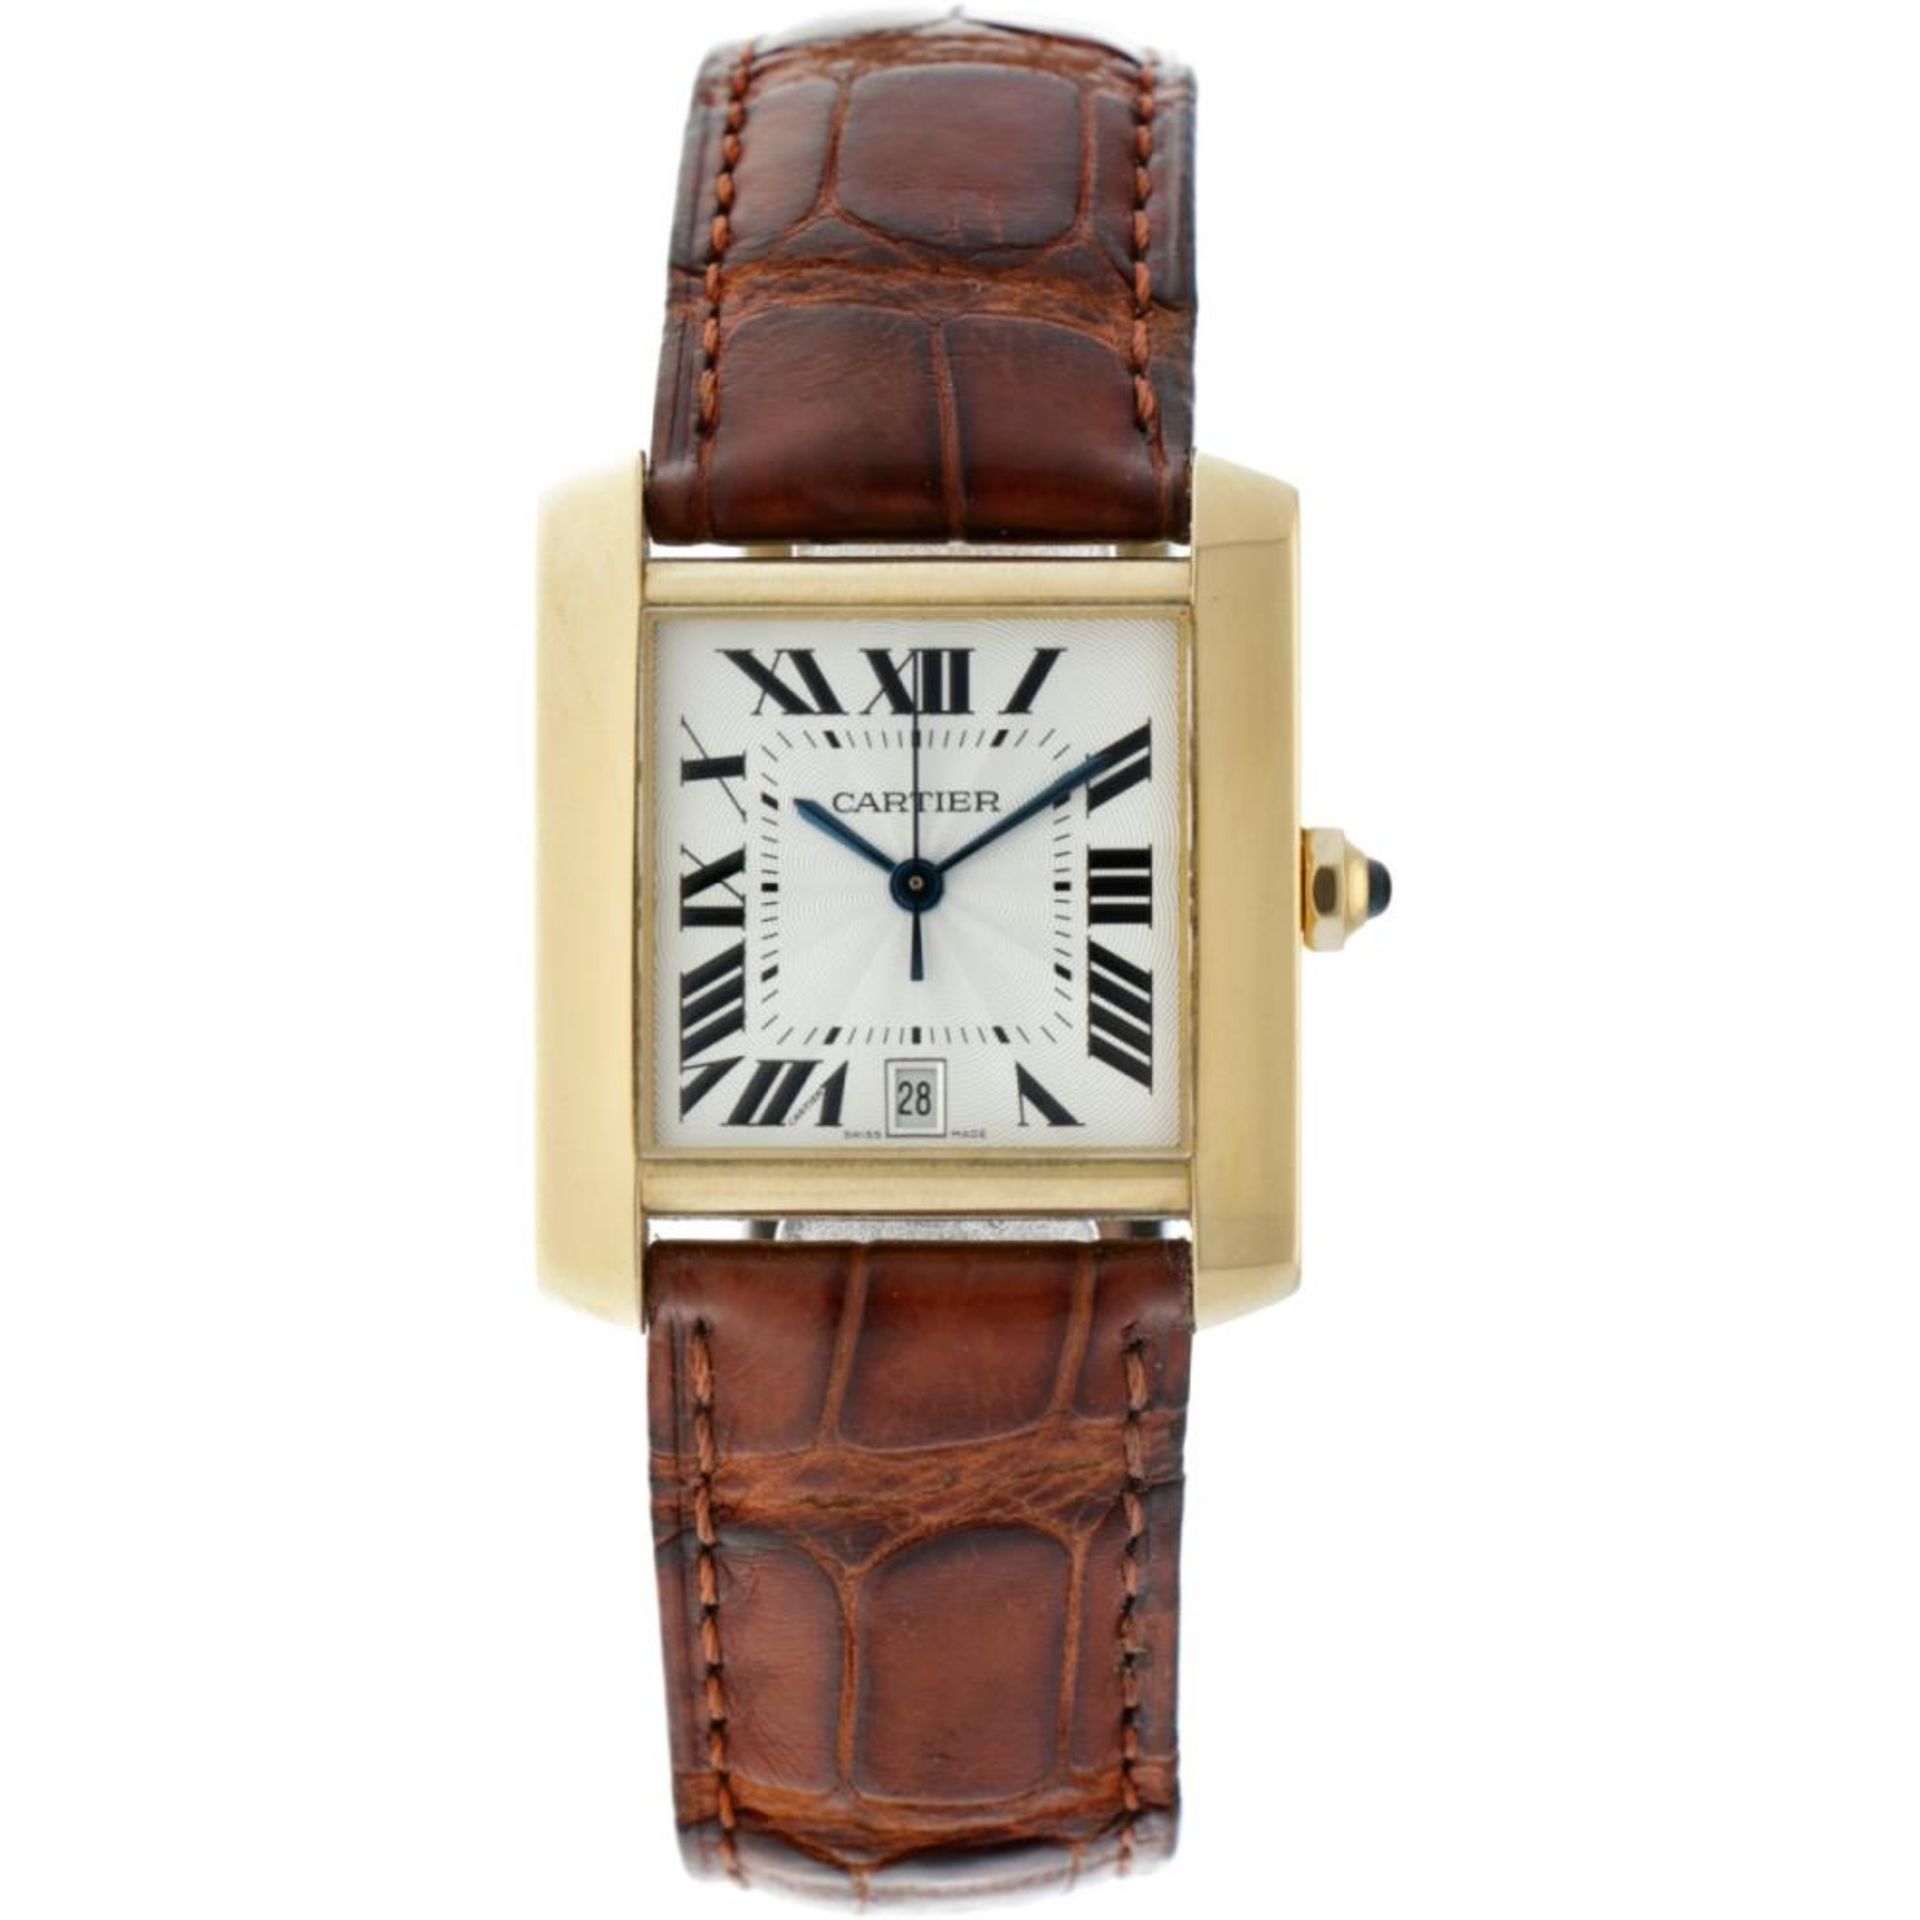 Cartier Tank Française 1840 - Men's watch - approx. 2000. - Image 2 of 12